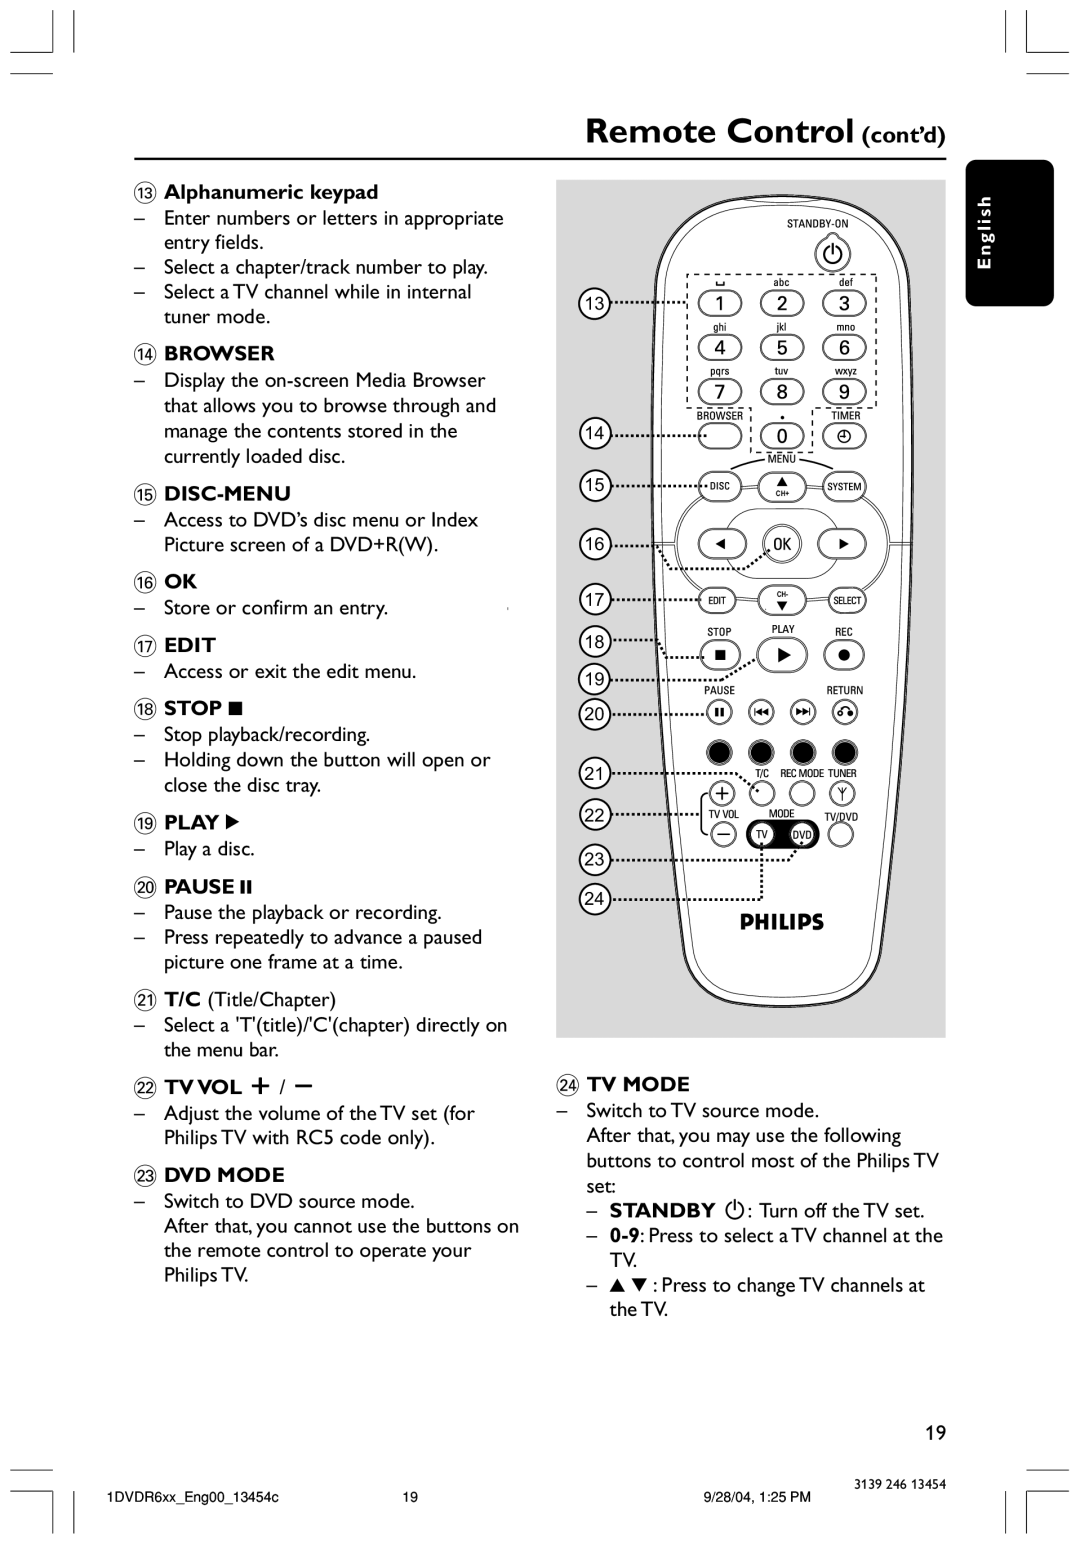 Philips DVDR612 Remote Control cont’d, # Alphanumeric keypad, $ Browser, Disc-Menu, Edit, Stop, Play, Pause, Tv Vol + 